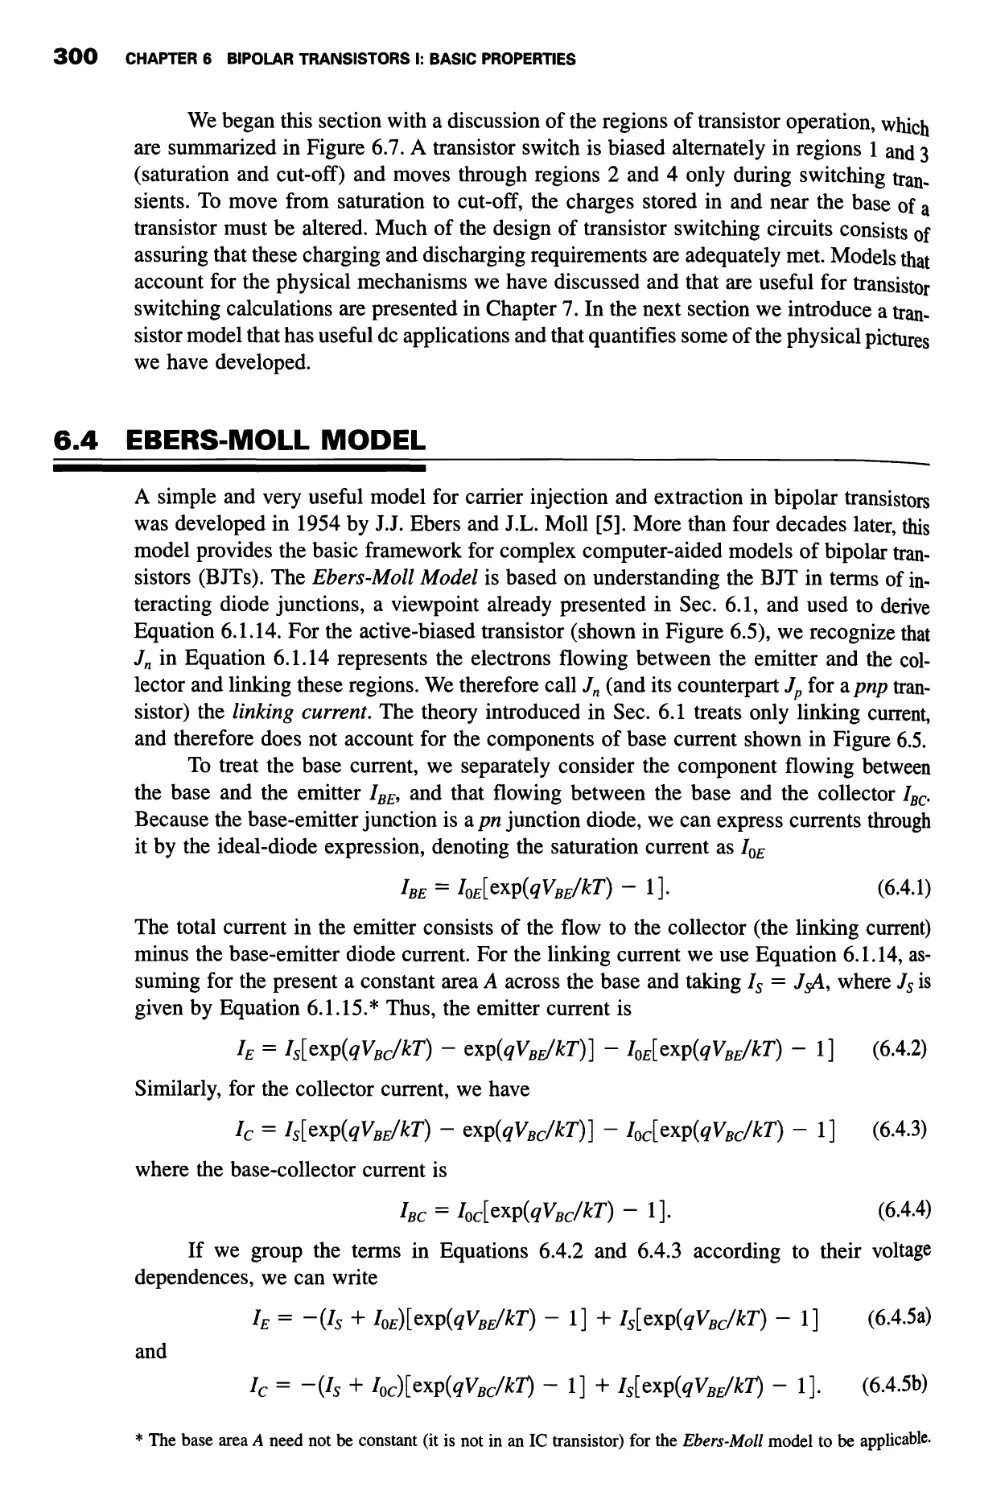 6.4 Ebers-Moll Model